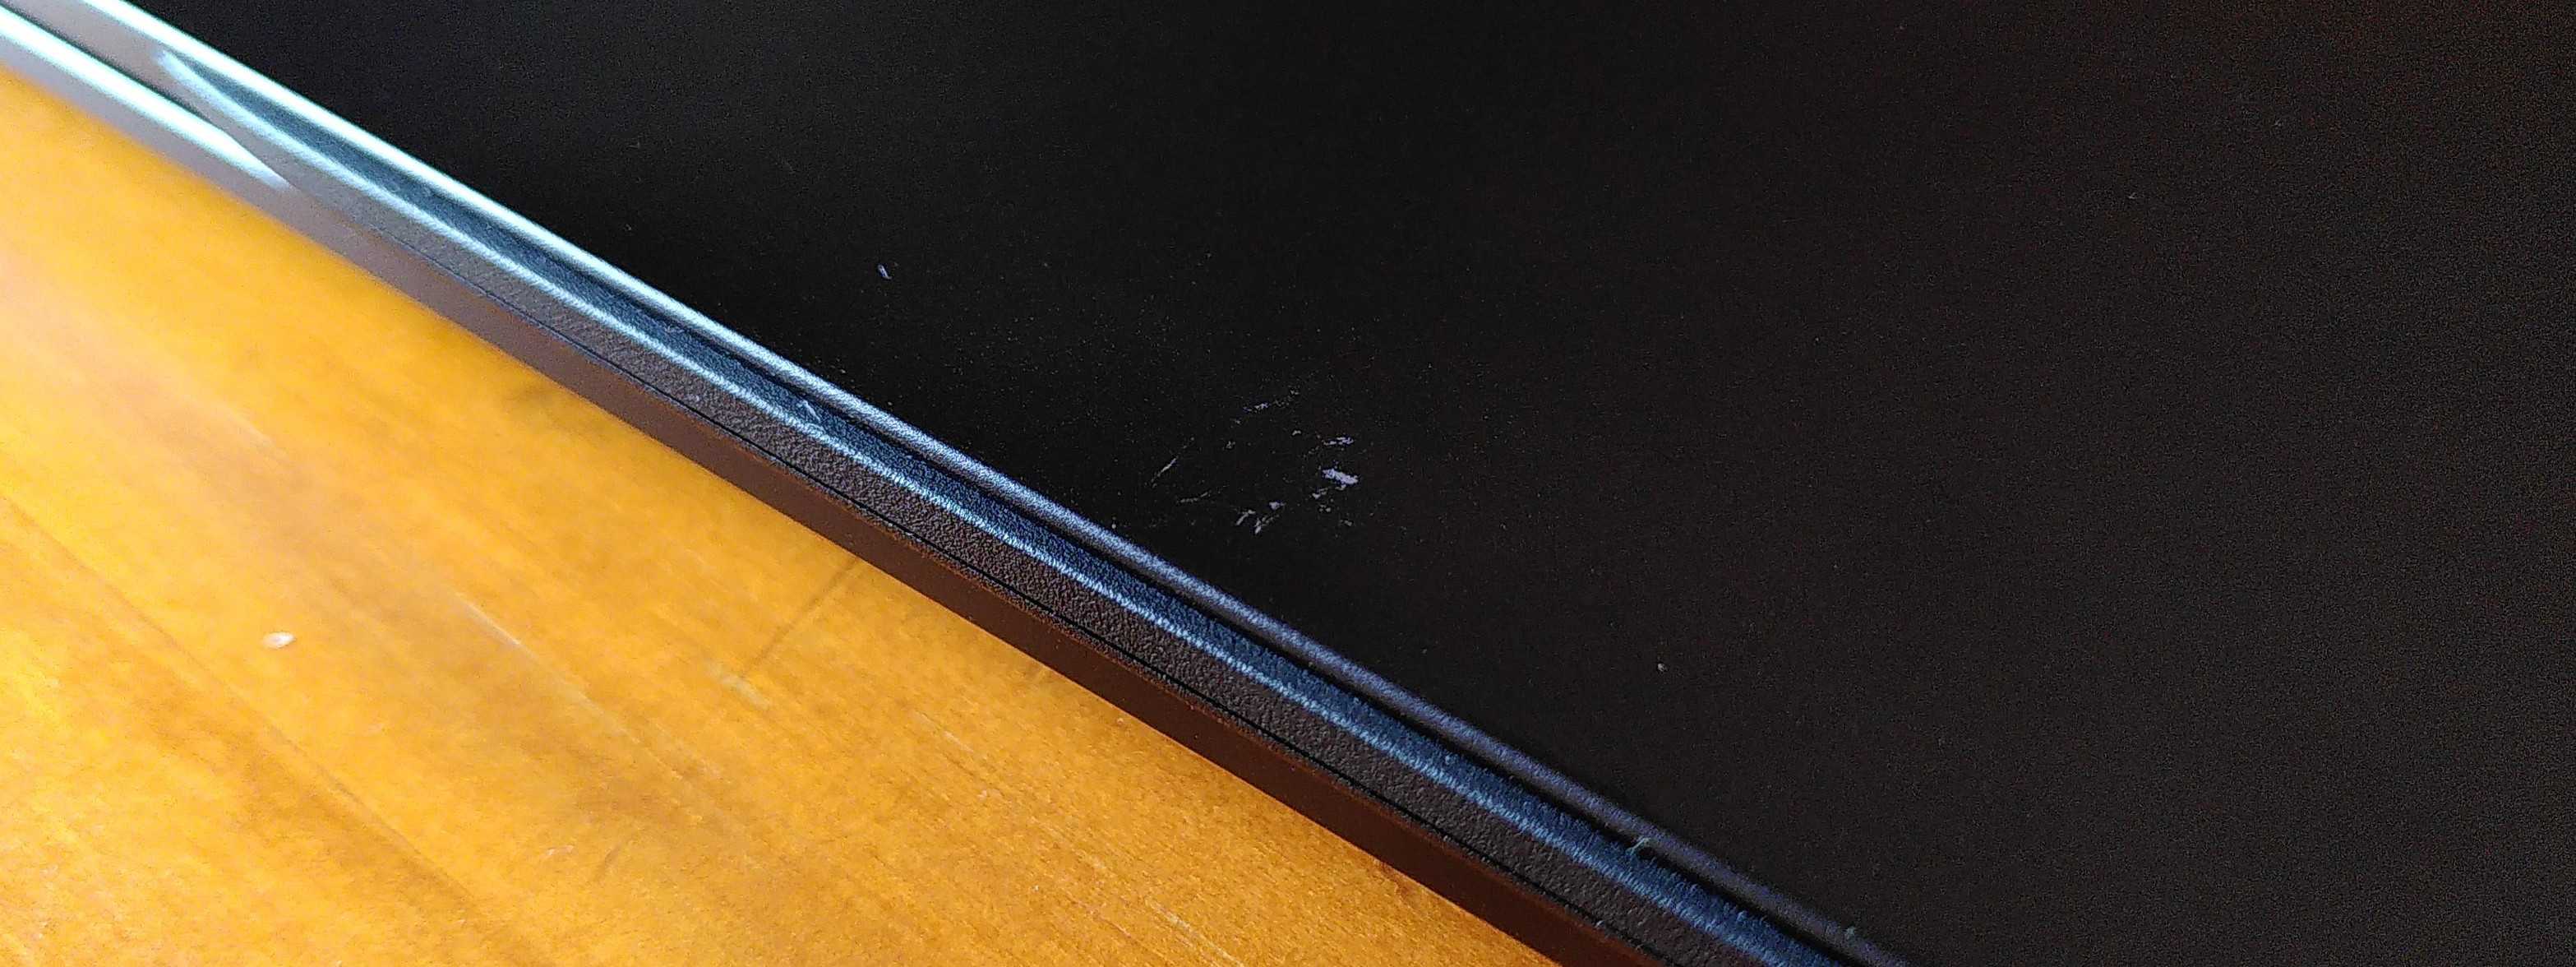 Tuxedo InfinityBook scratched